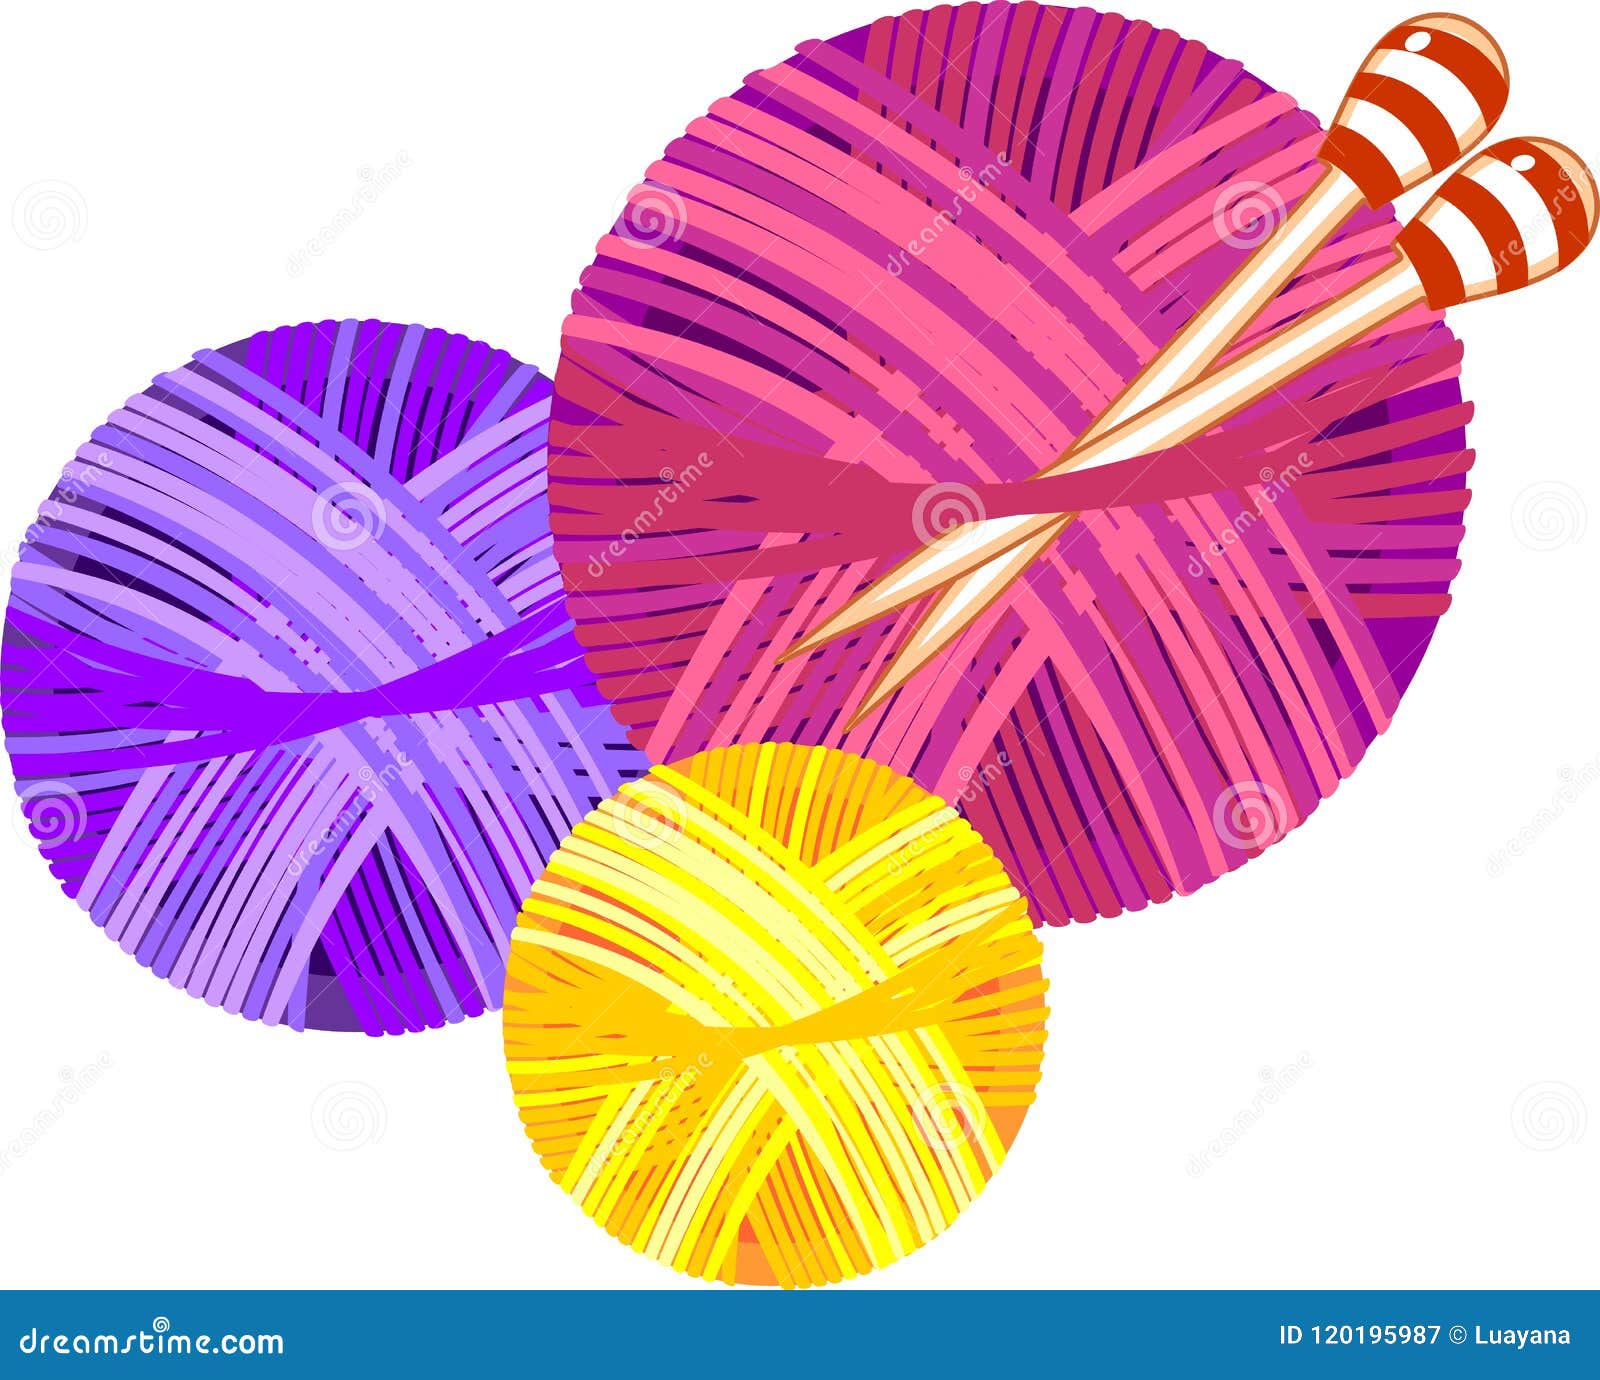 Colorful Yarn Balls With Knitting Needles Stock Vector - Illustration ...